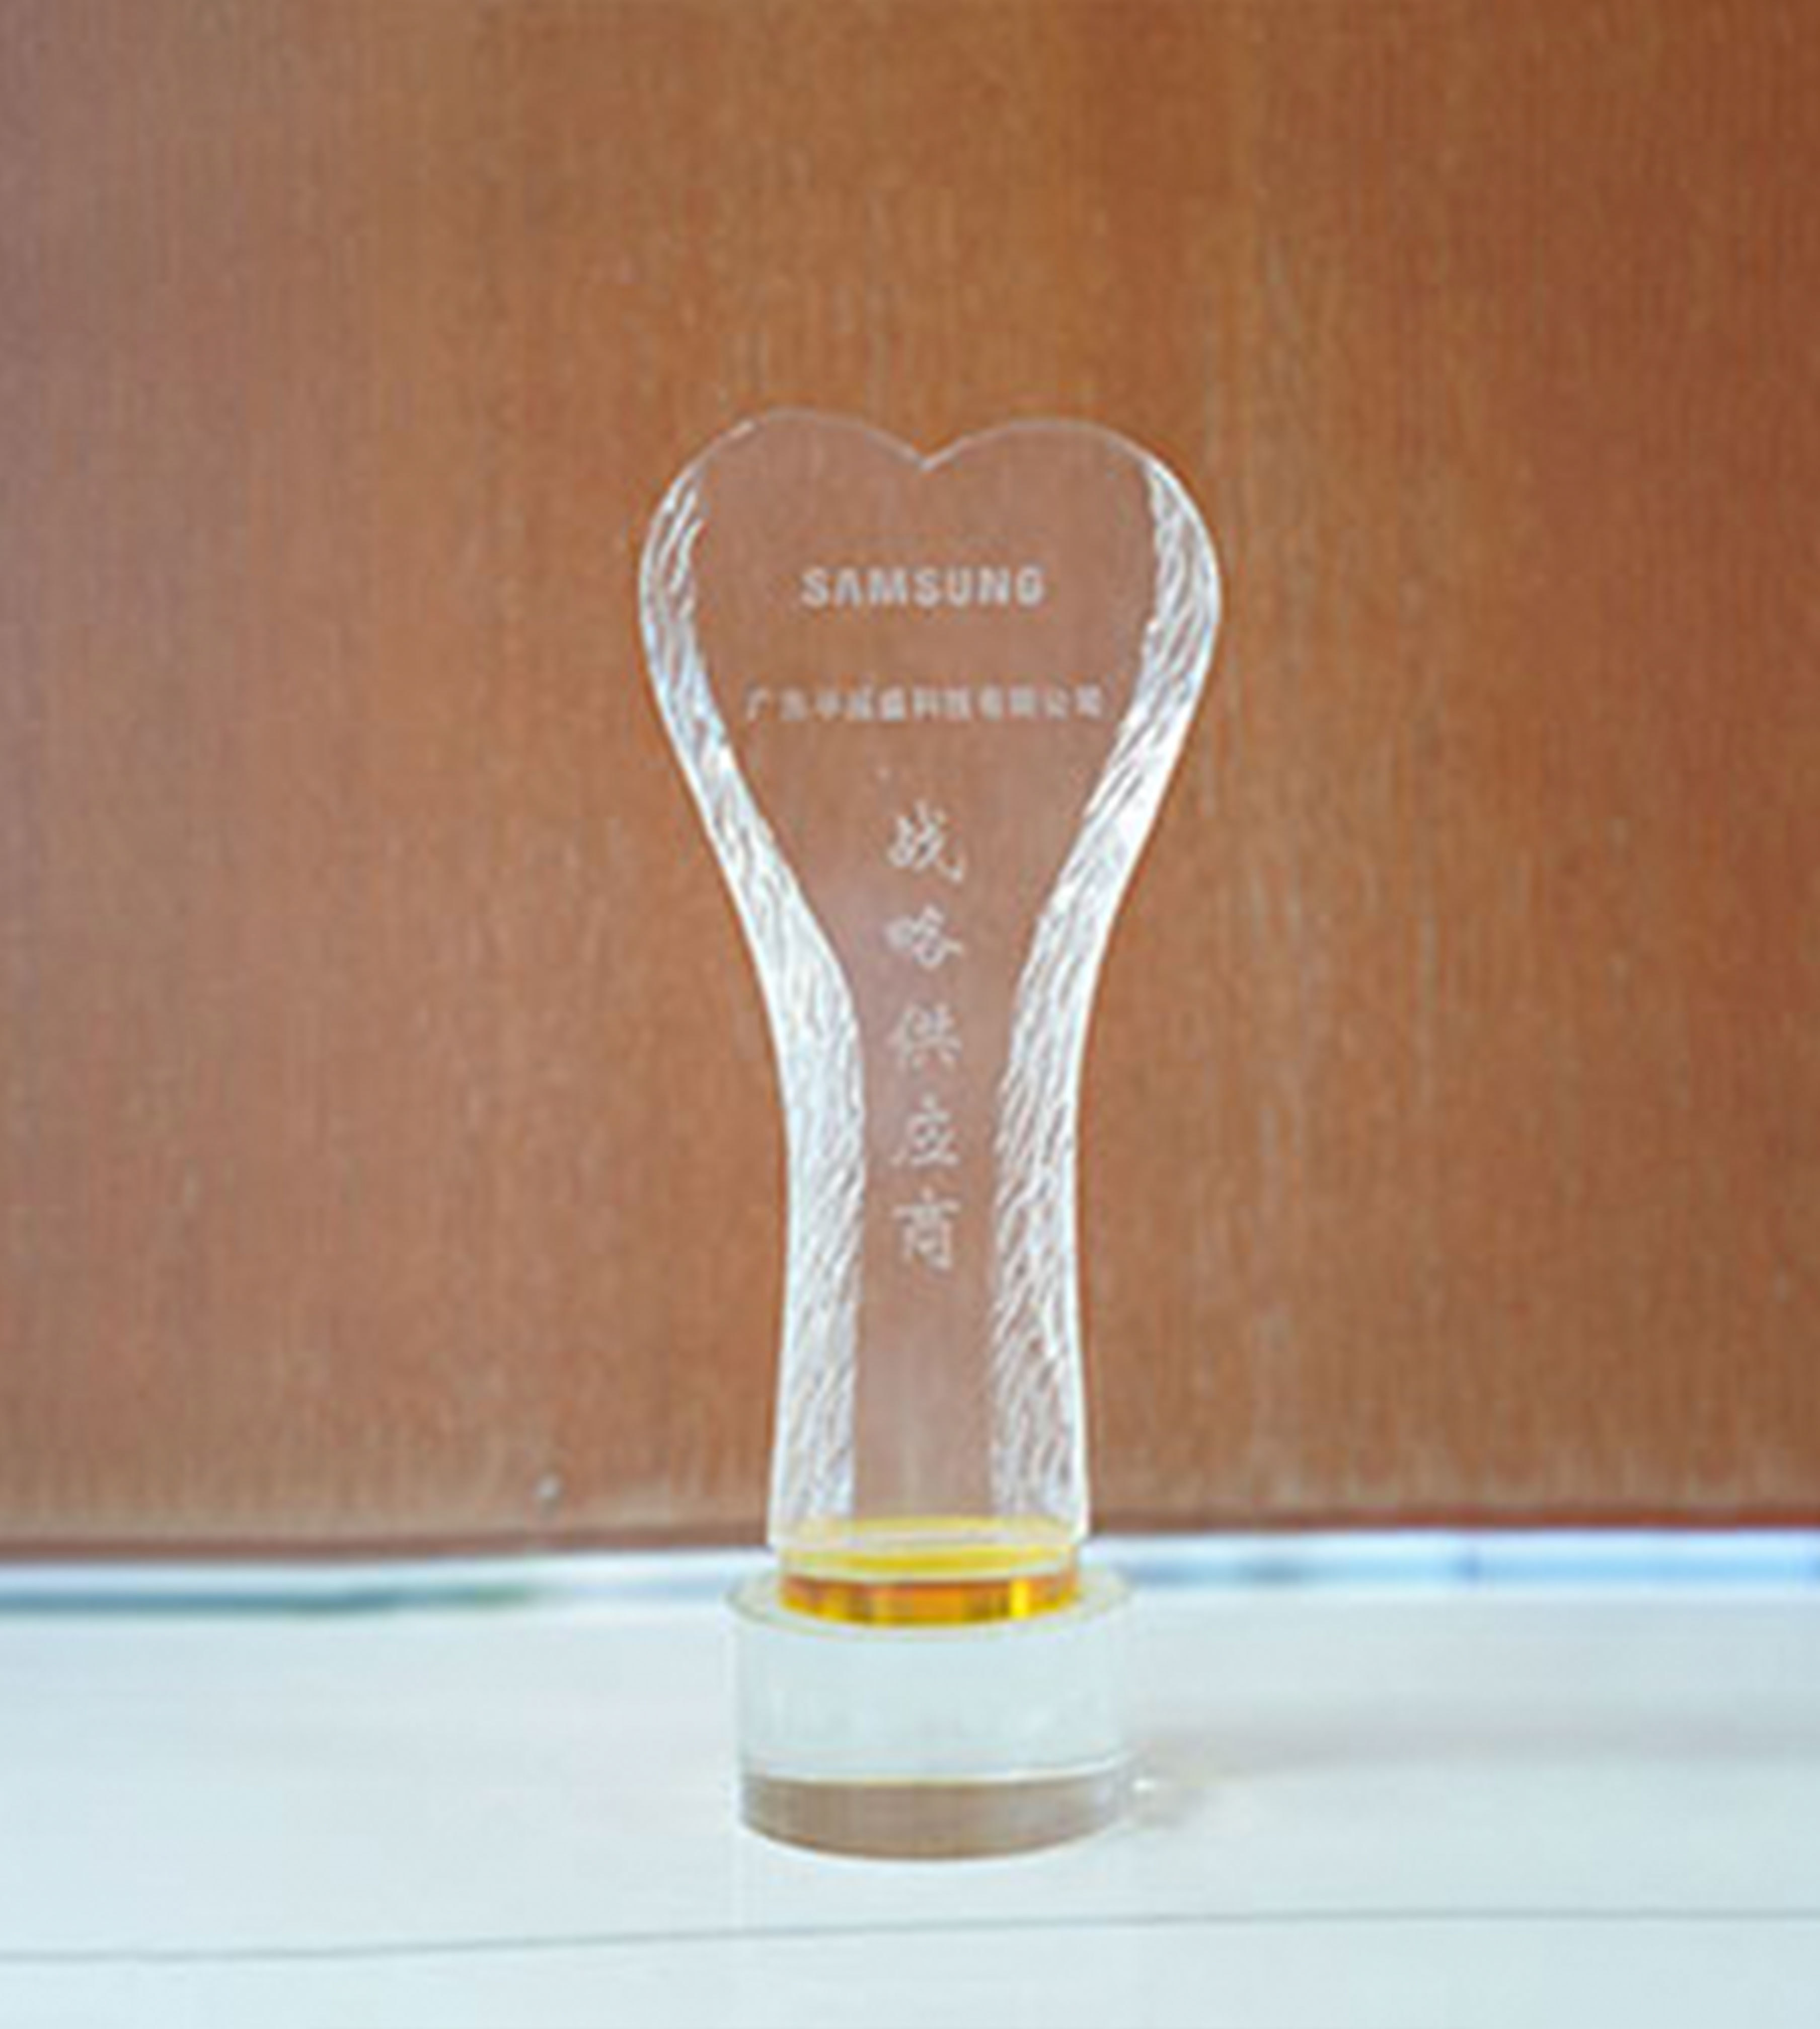 Samsung awarded Strategic Supplier designation